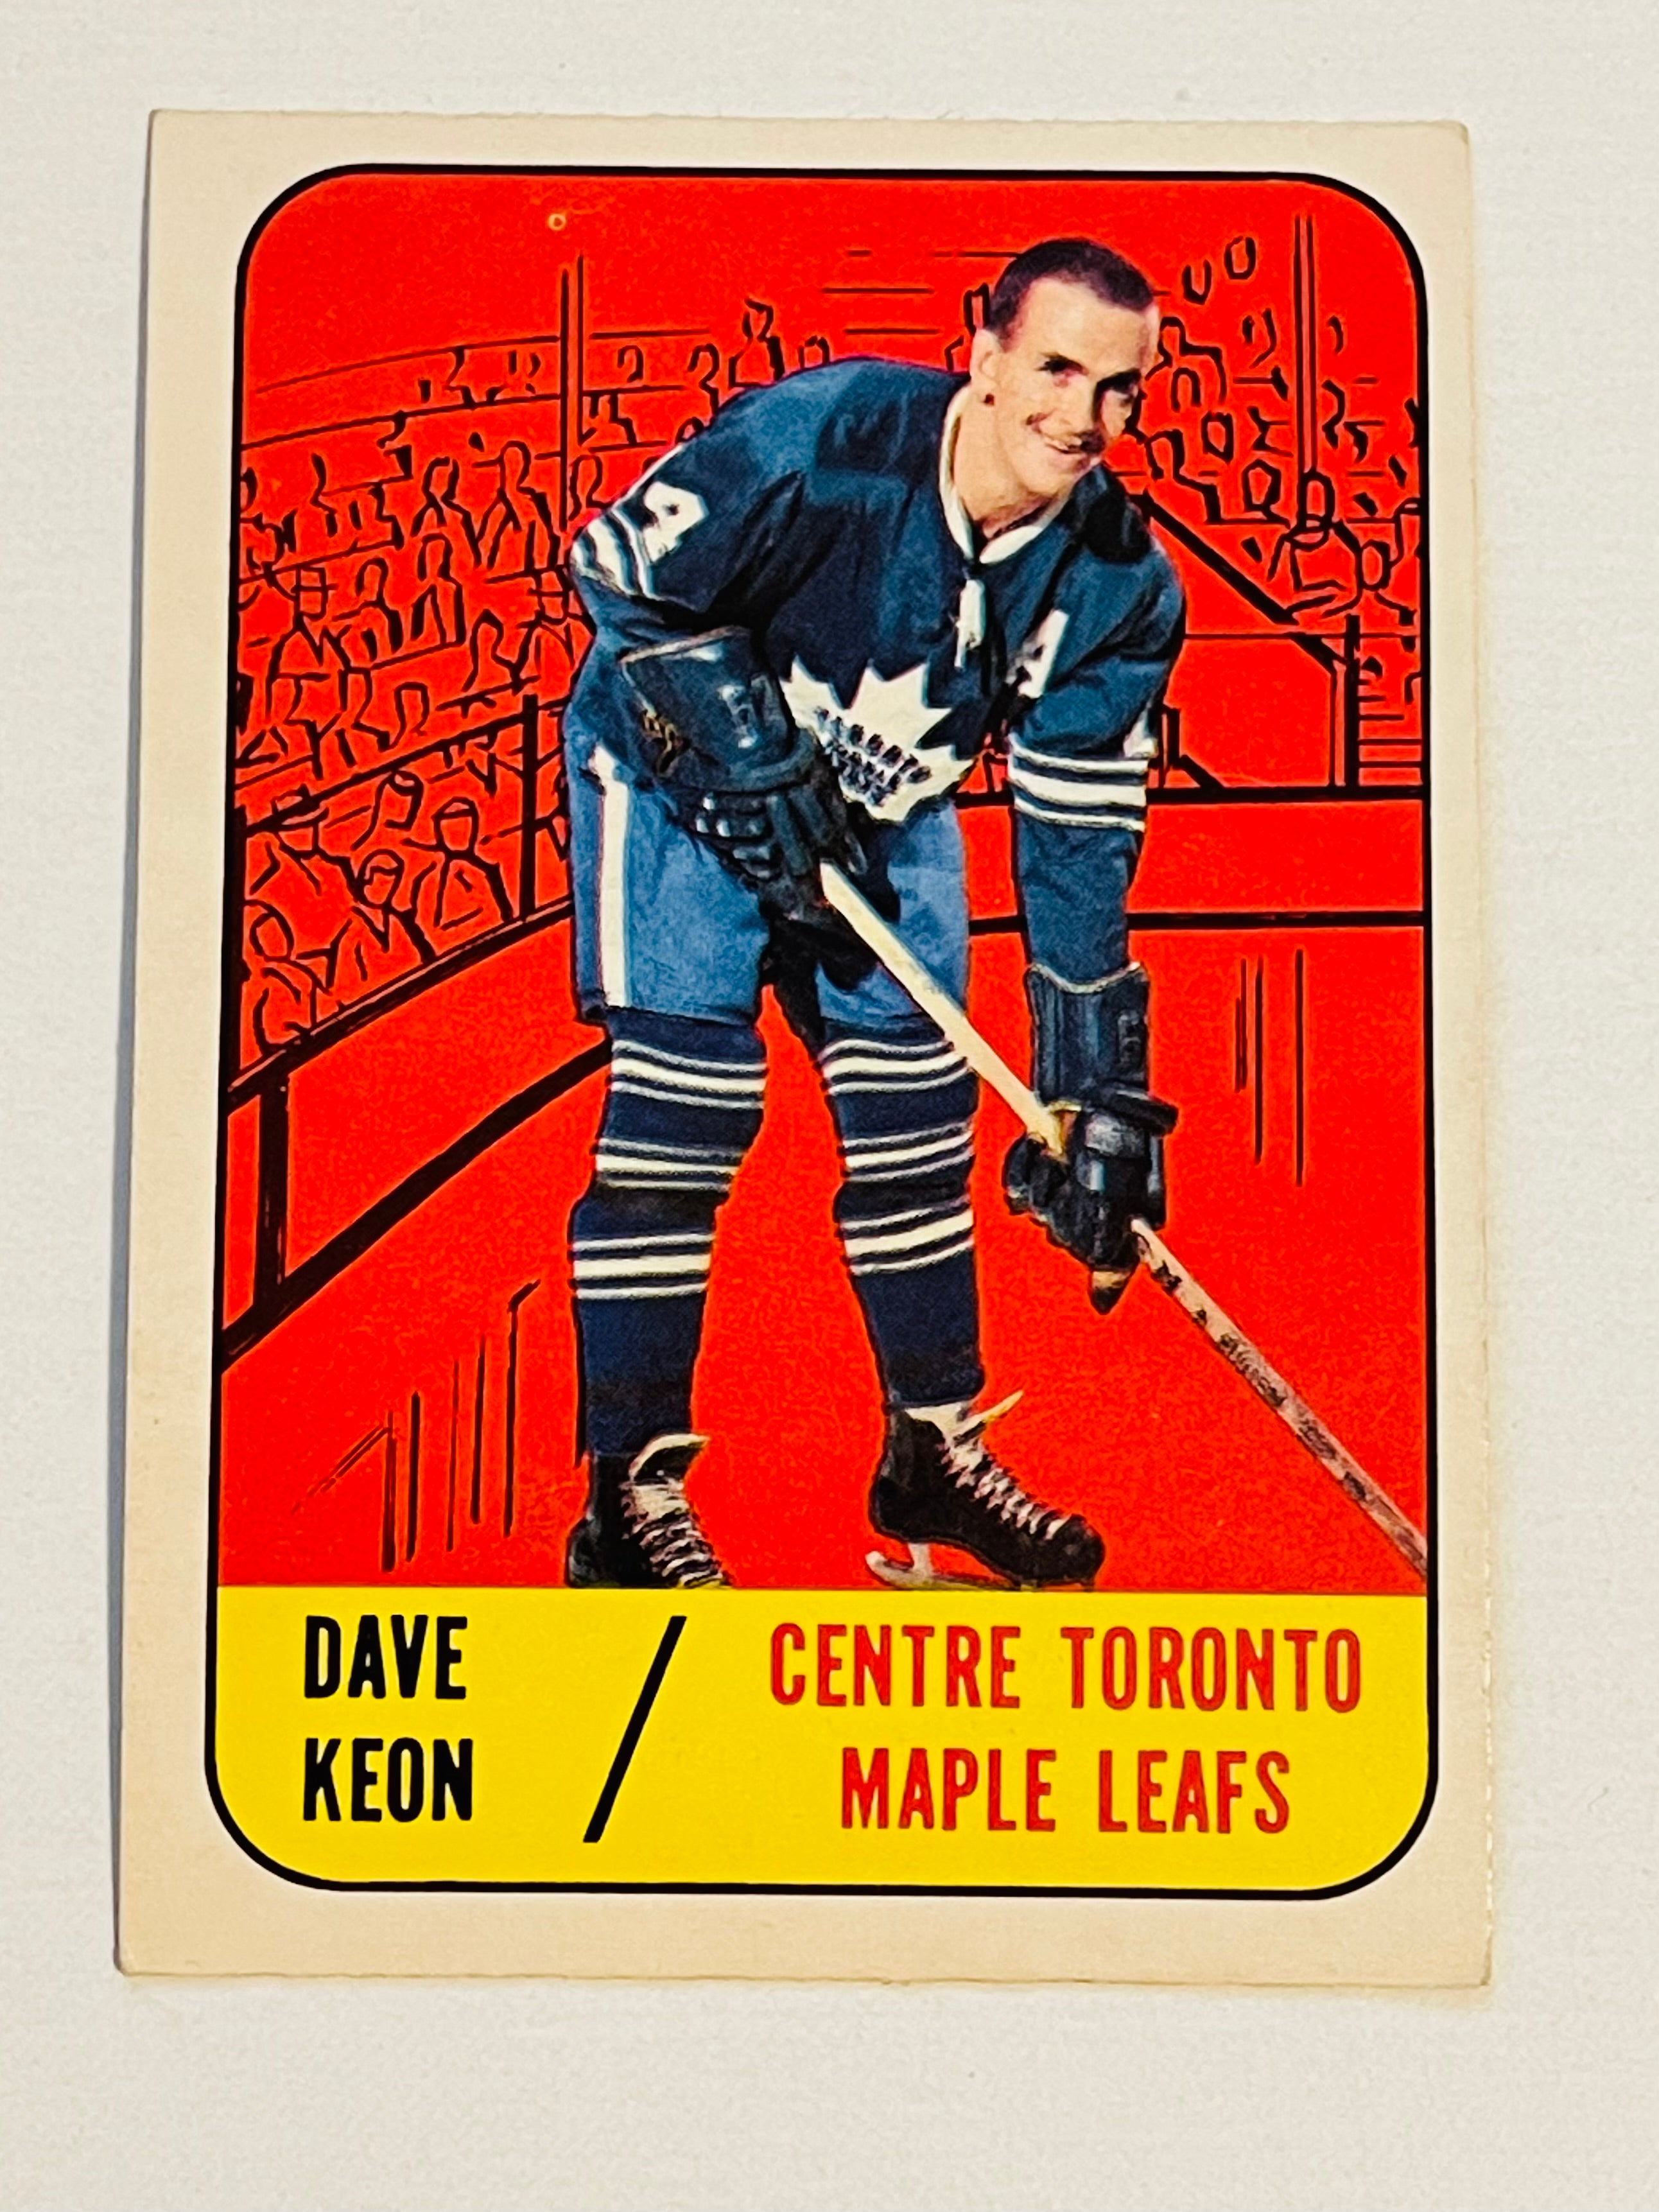 Dave Keon high grade opc hockey card 1967